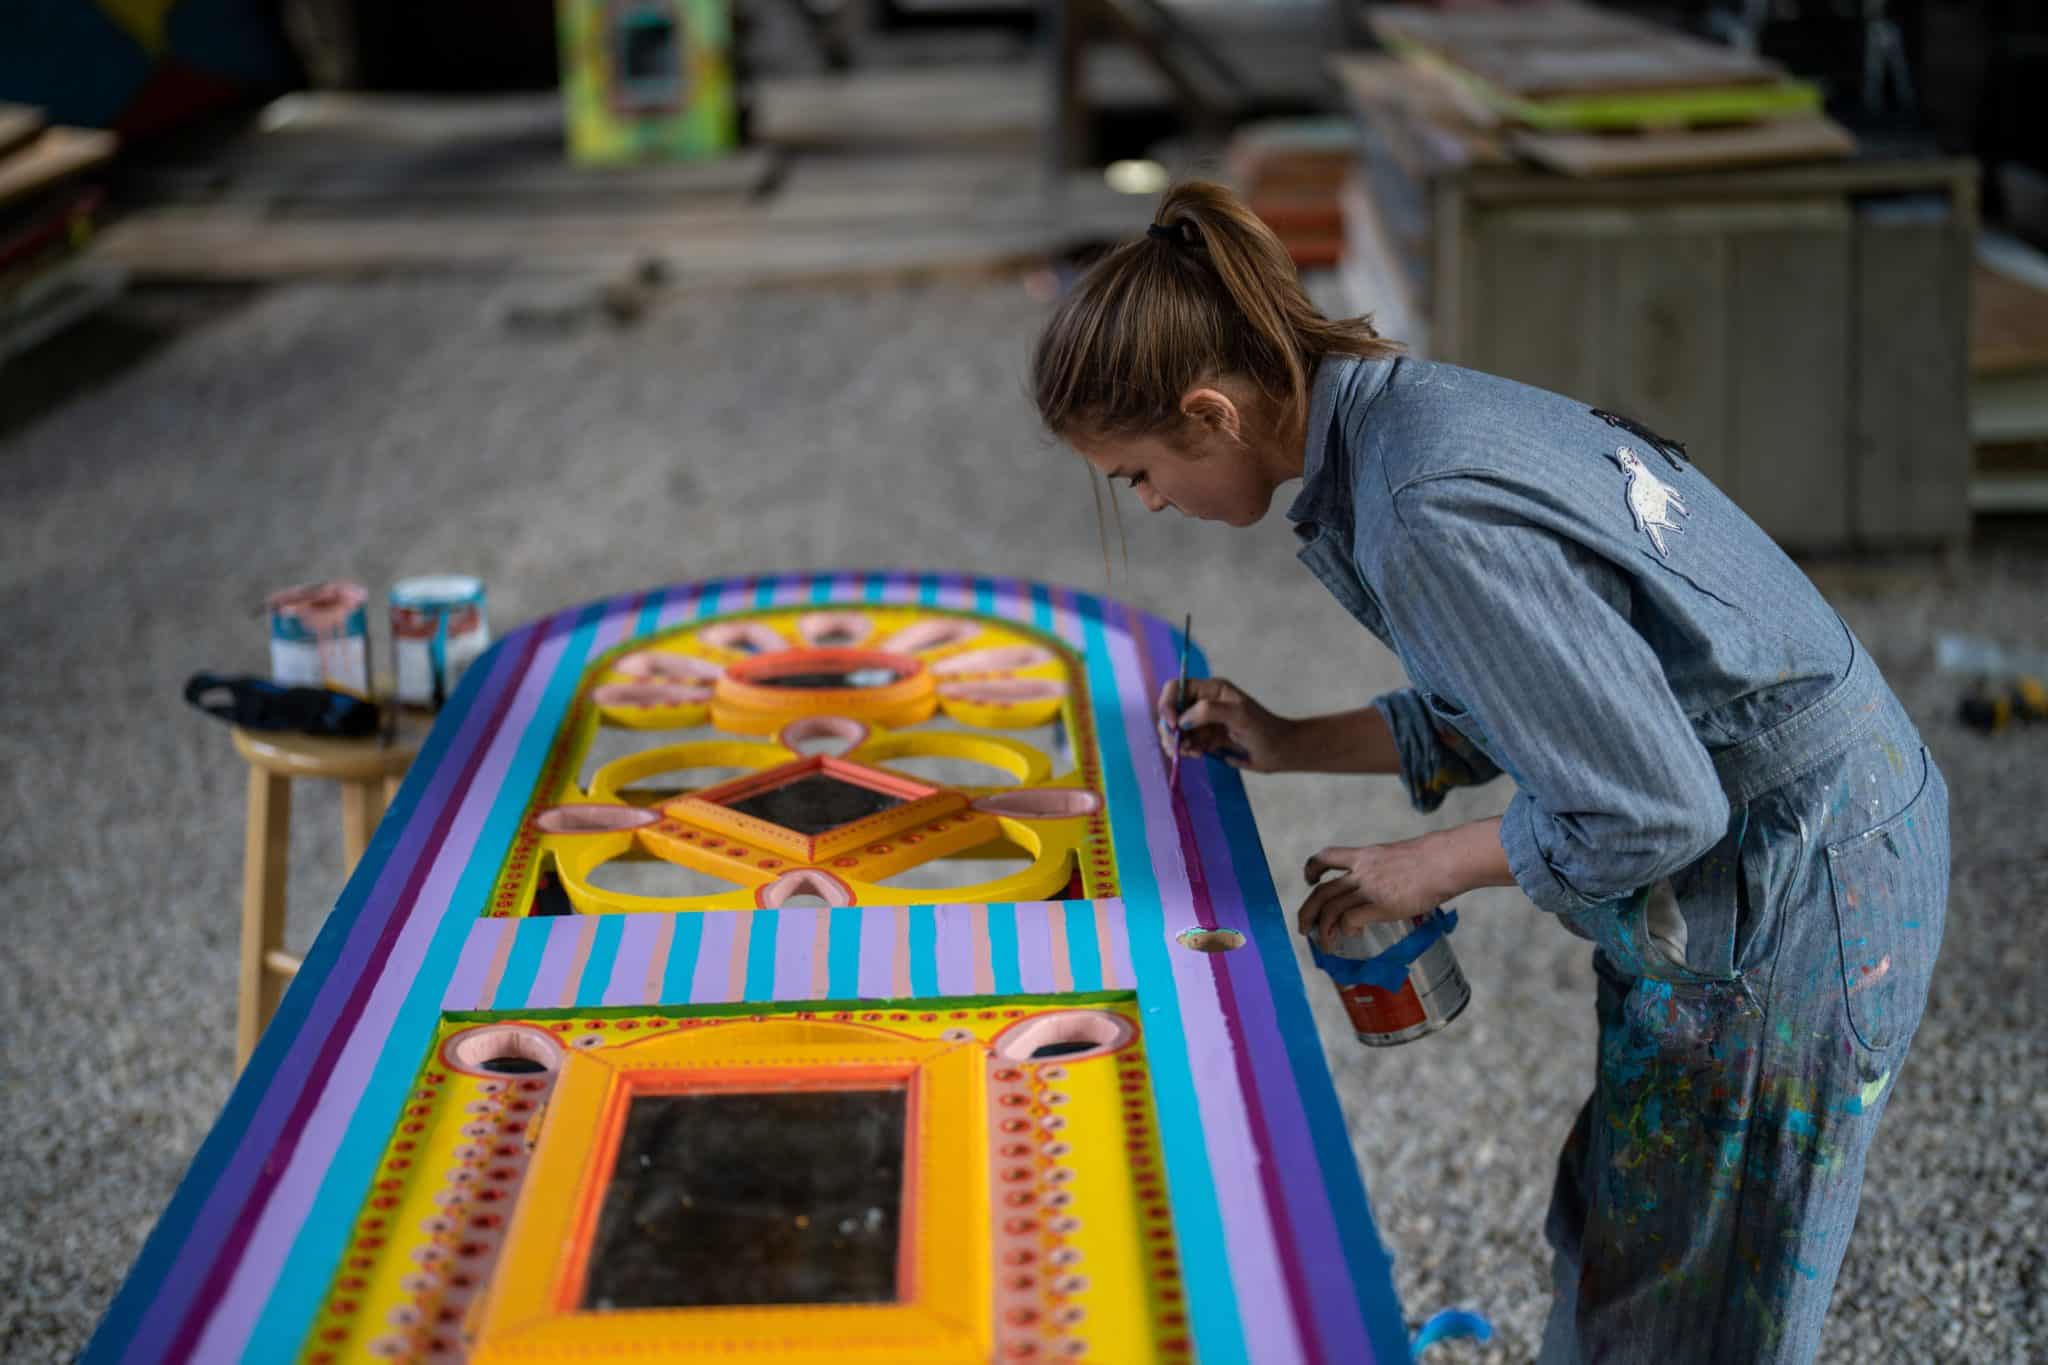 Artist Brooke Einbender painting a door for an installation